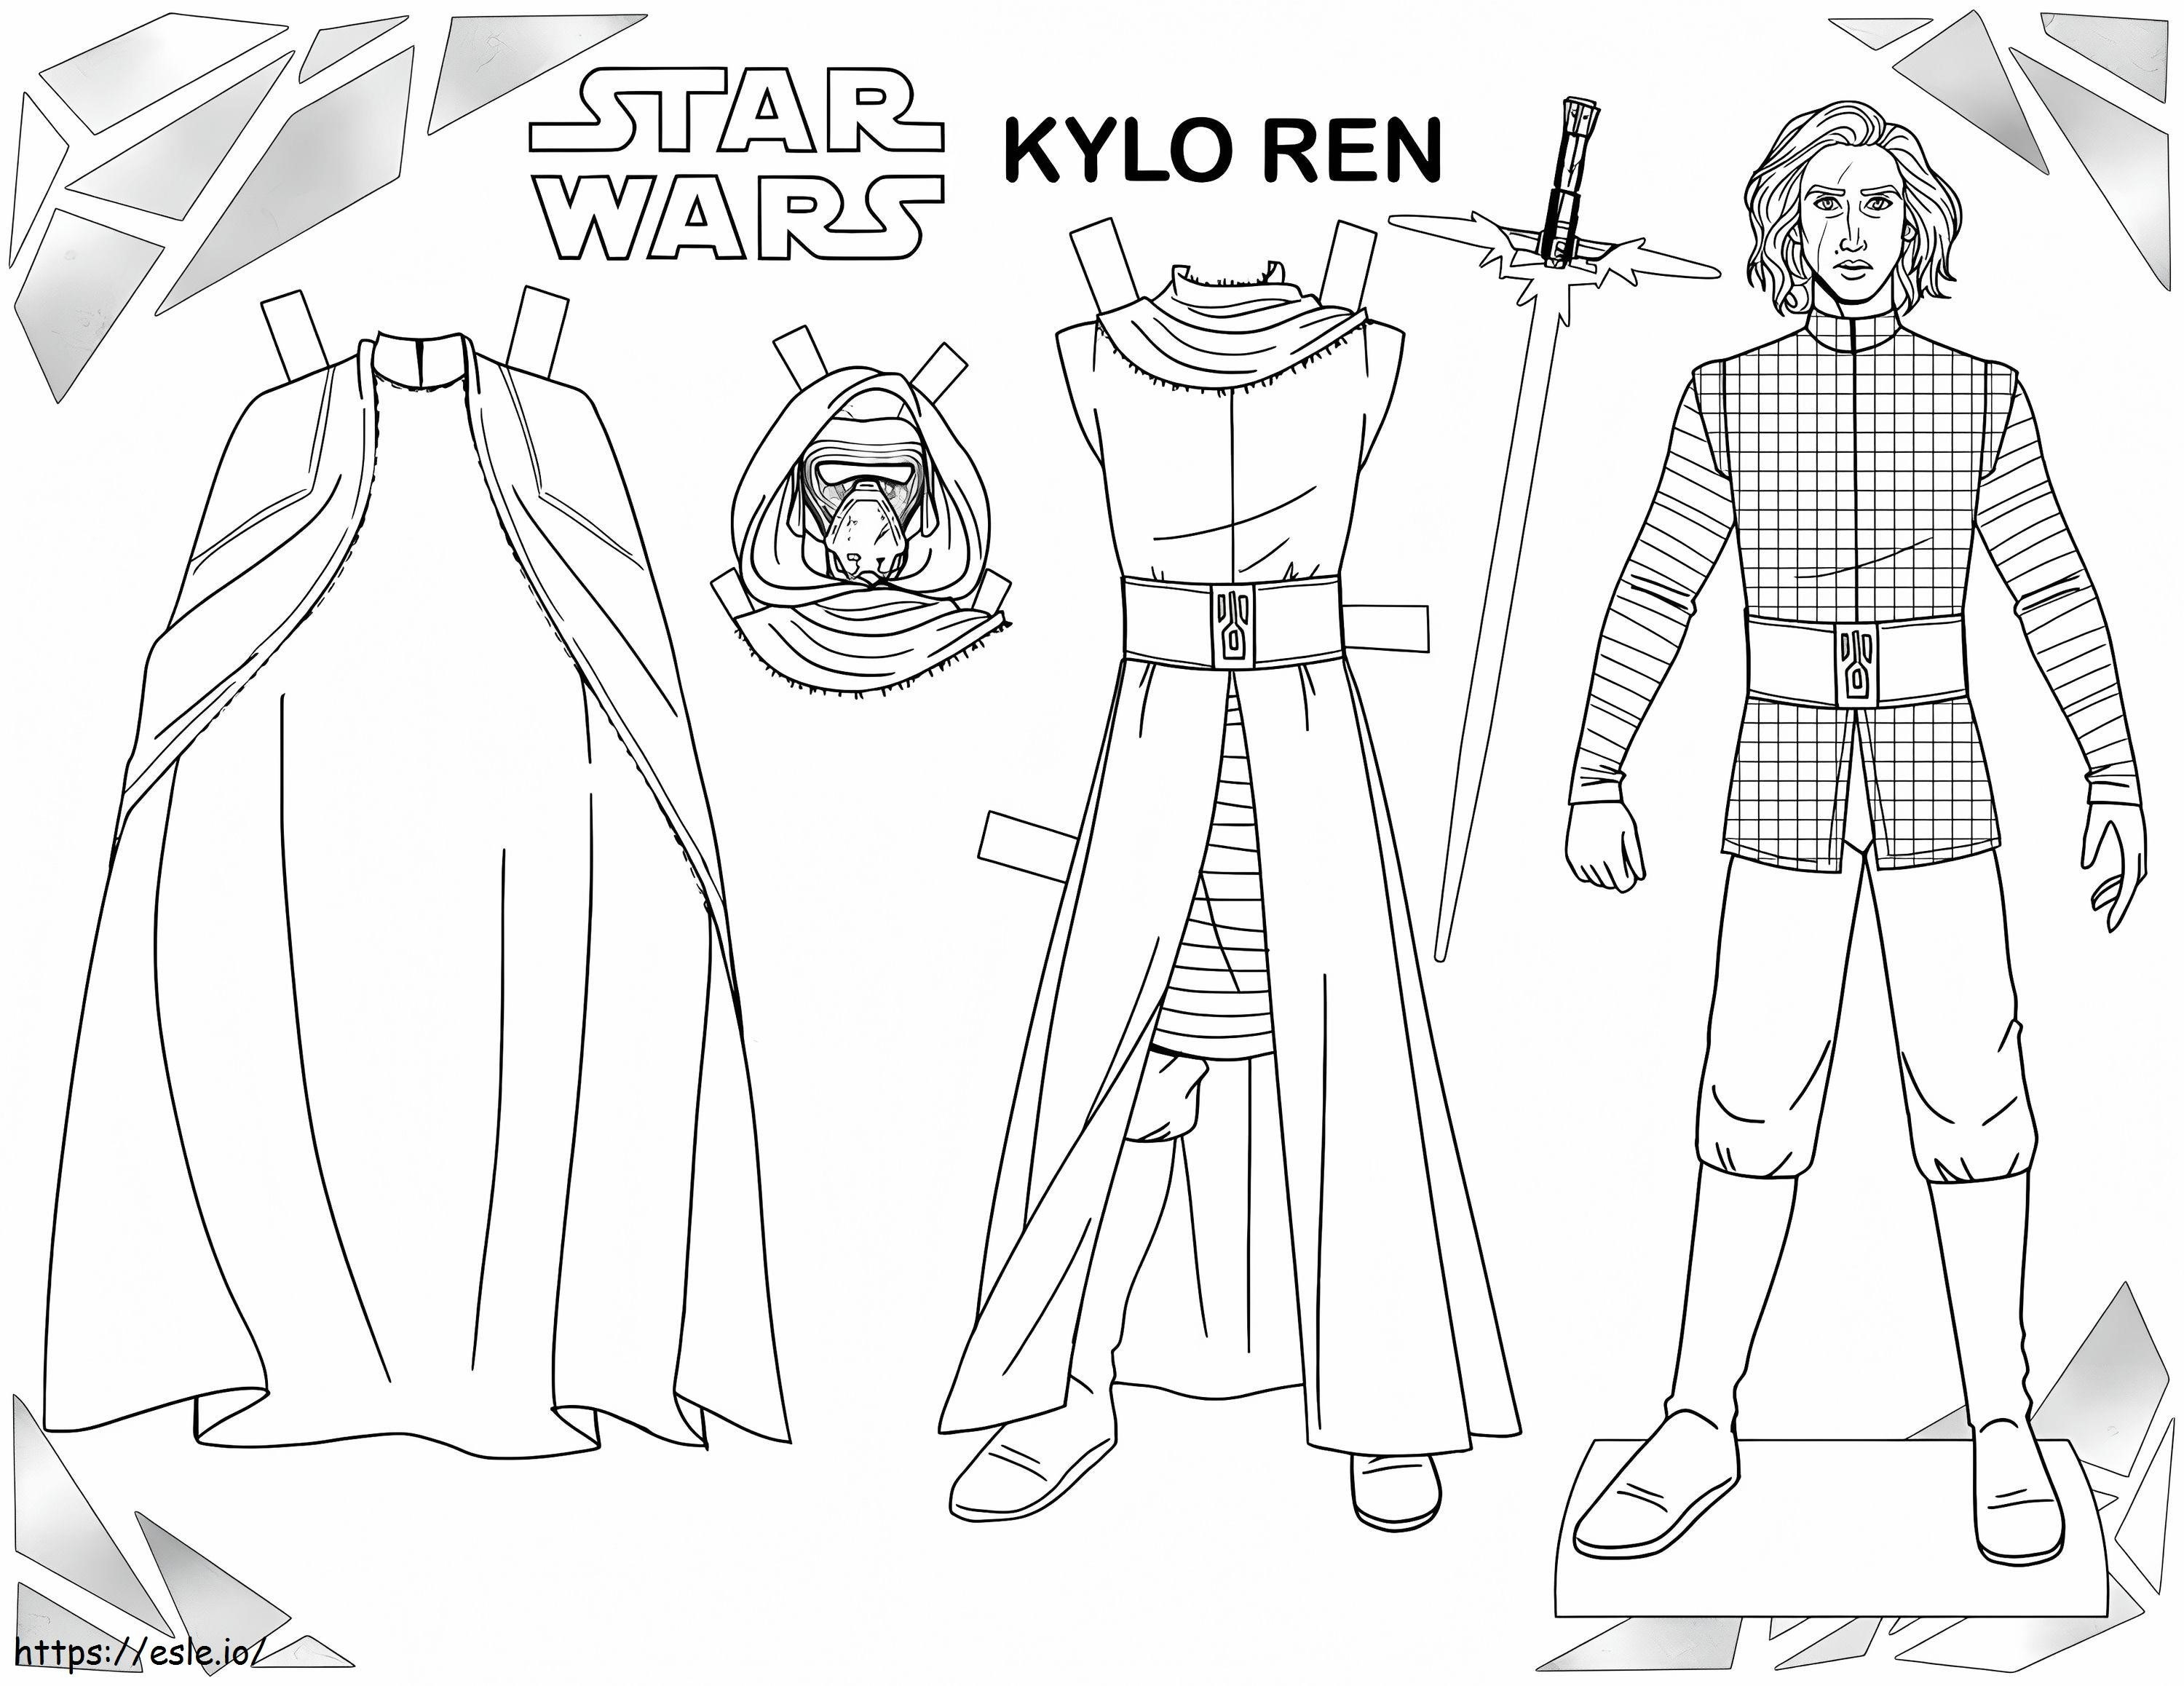 Kylo Ren 2 coloring page